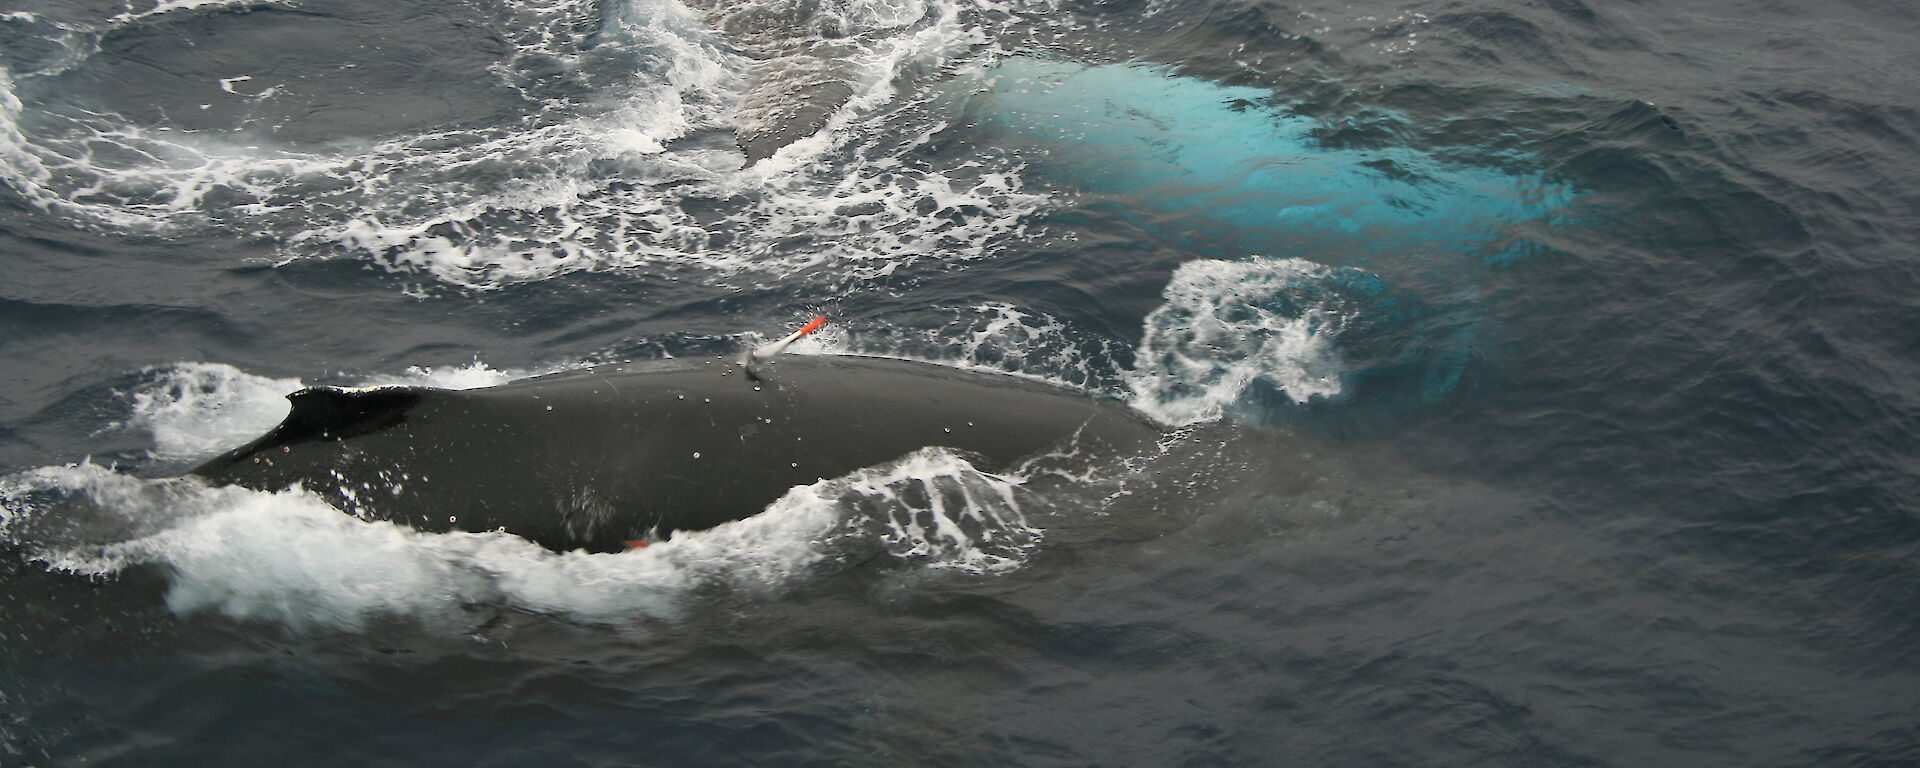 Tagged humpback whale